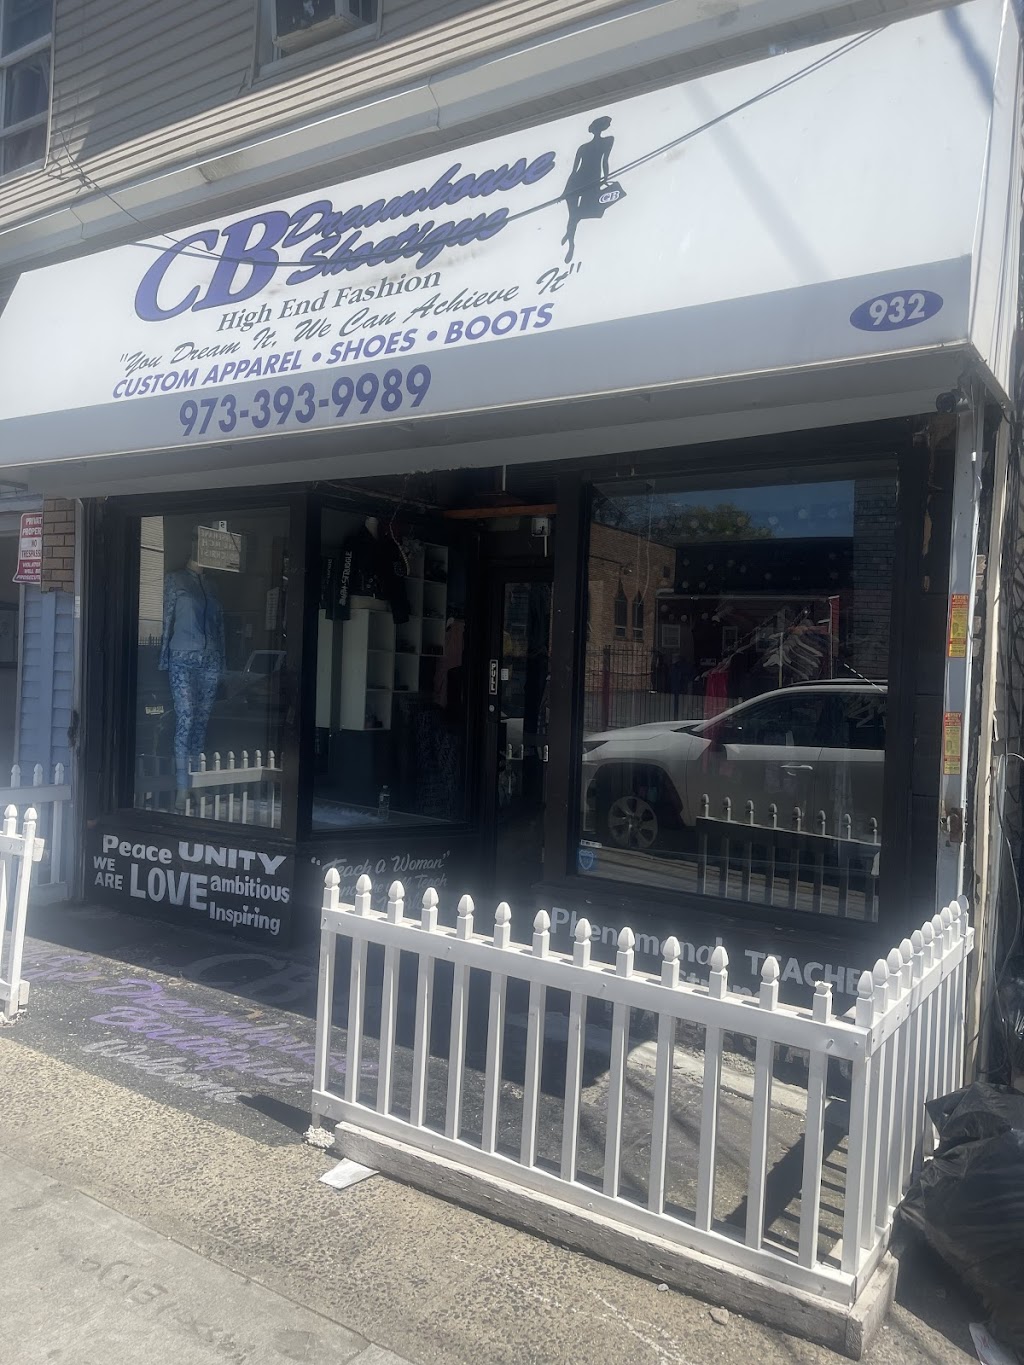 CB Dream House Boutique | 932 Bergen St, Newark, NJ 07112 | Phone: (973) 870-5875